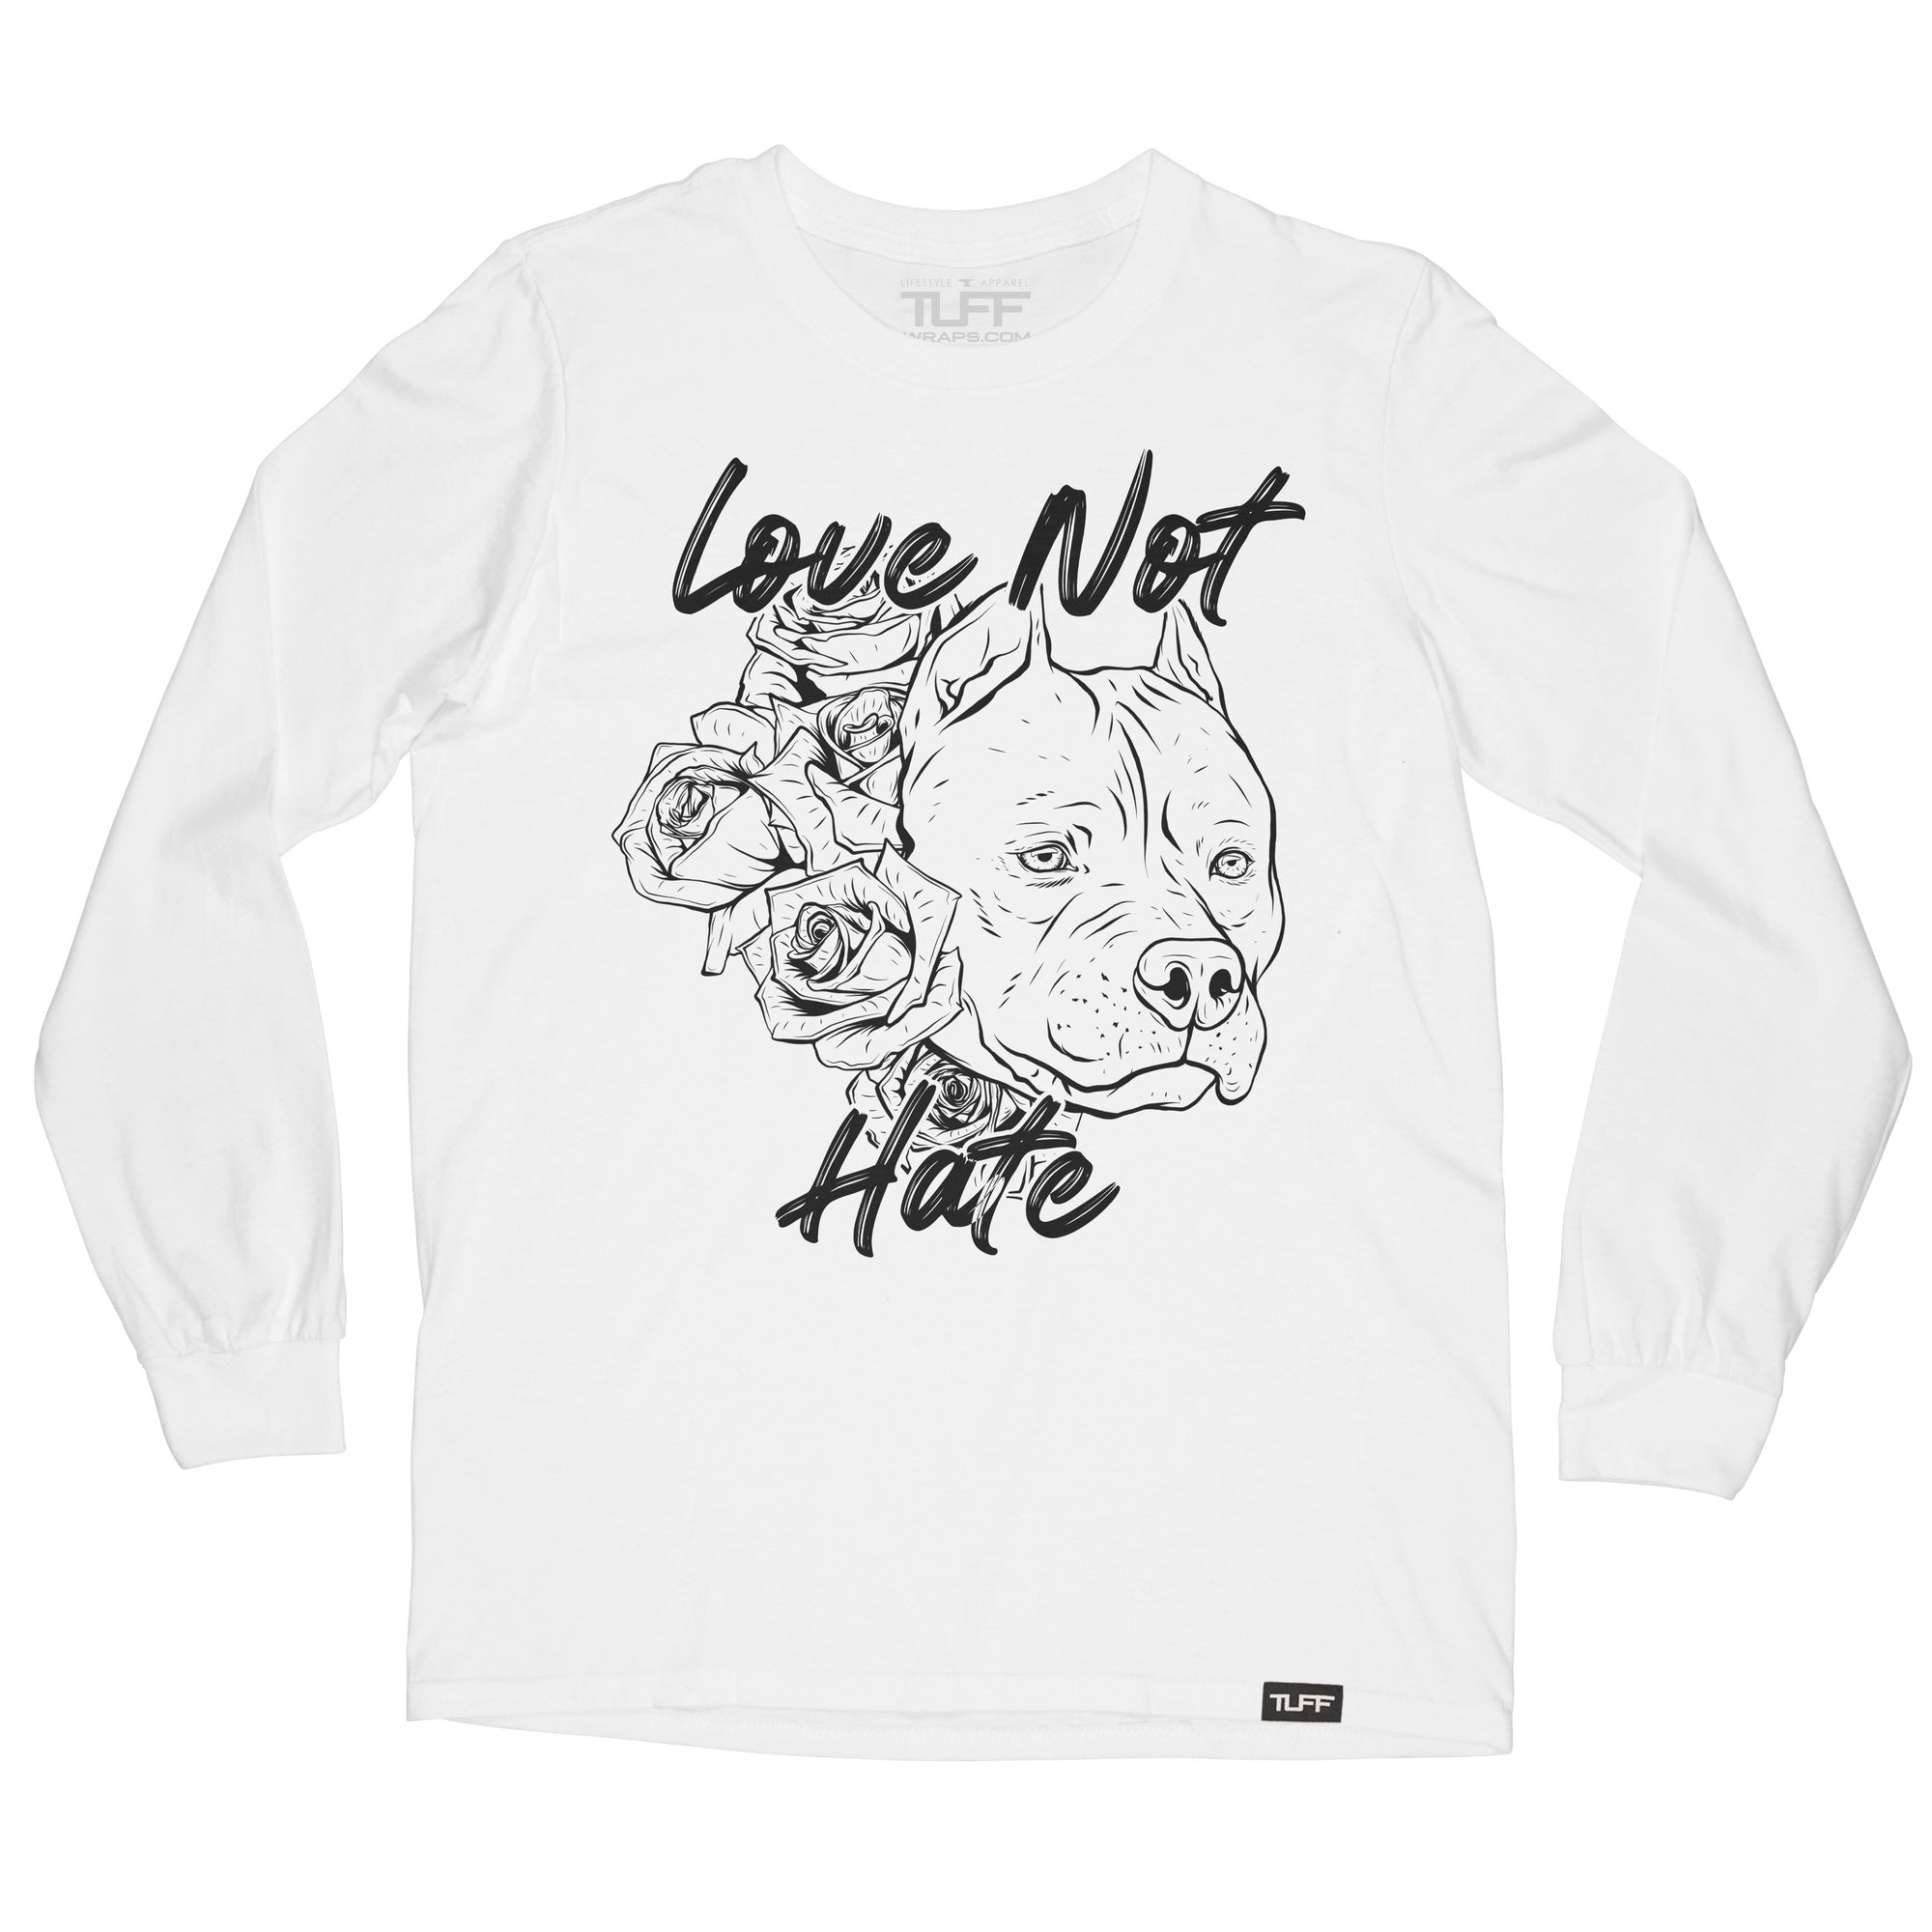 Love Not Hate Long Sleeve Tee S / White TuffWraps.com